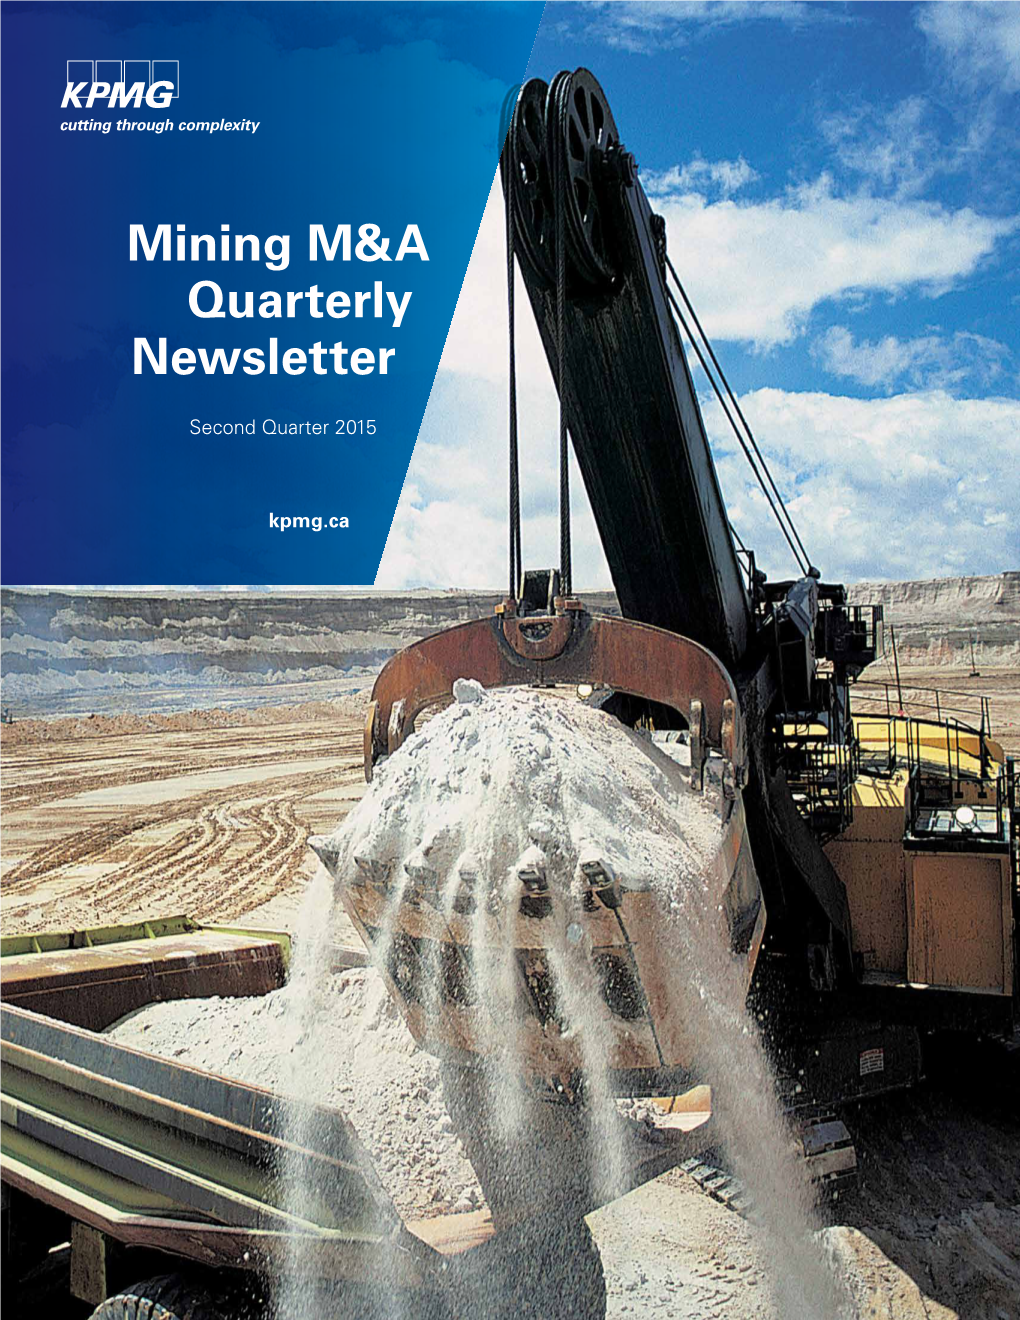 KPMG Mining M&A Quarterly Newsletter Q2 2015